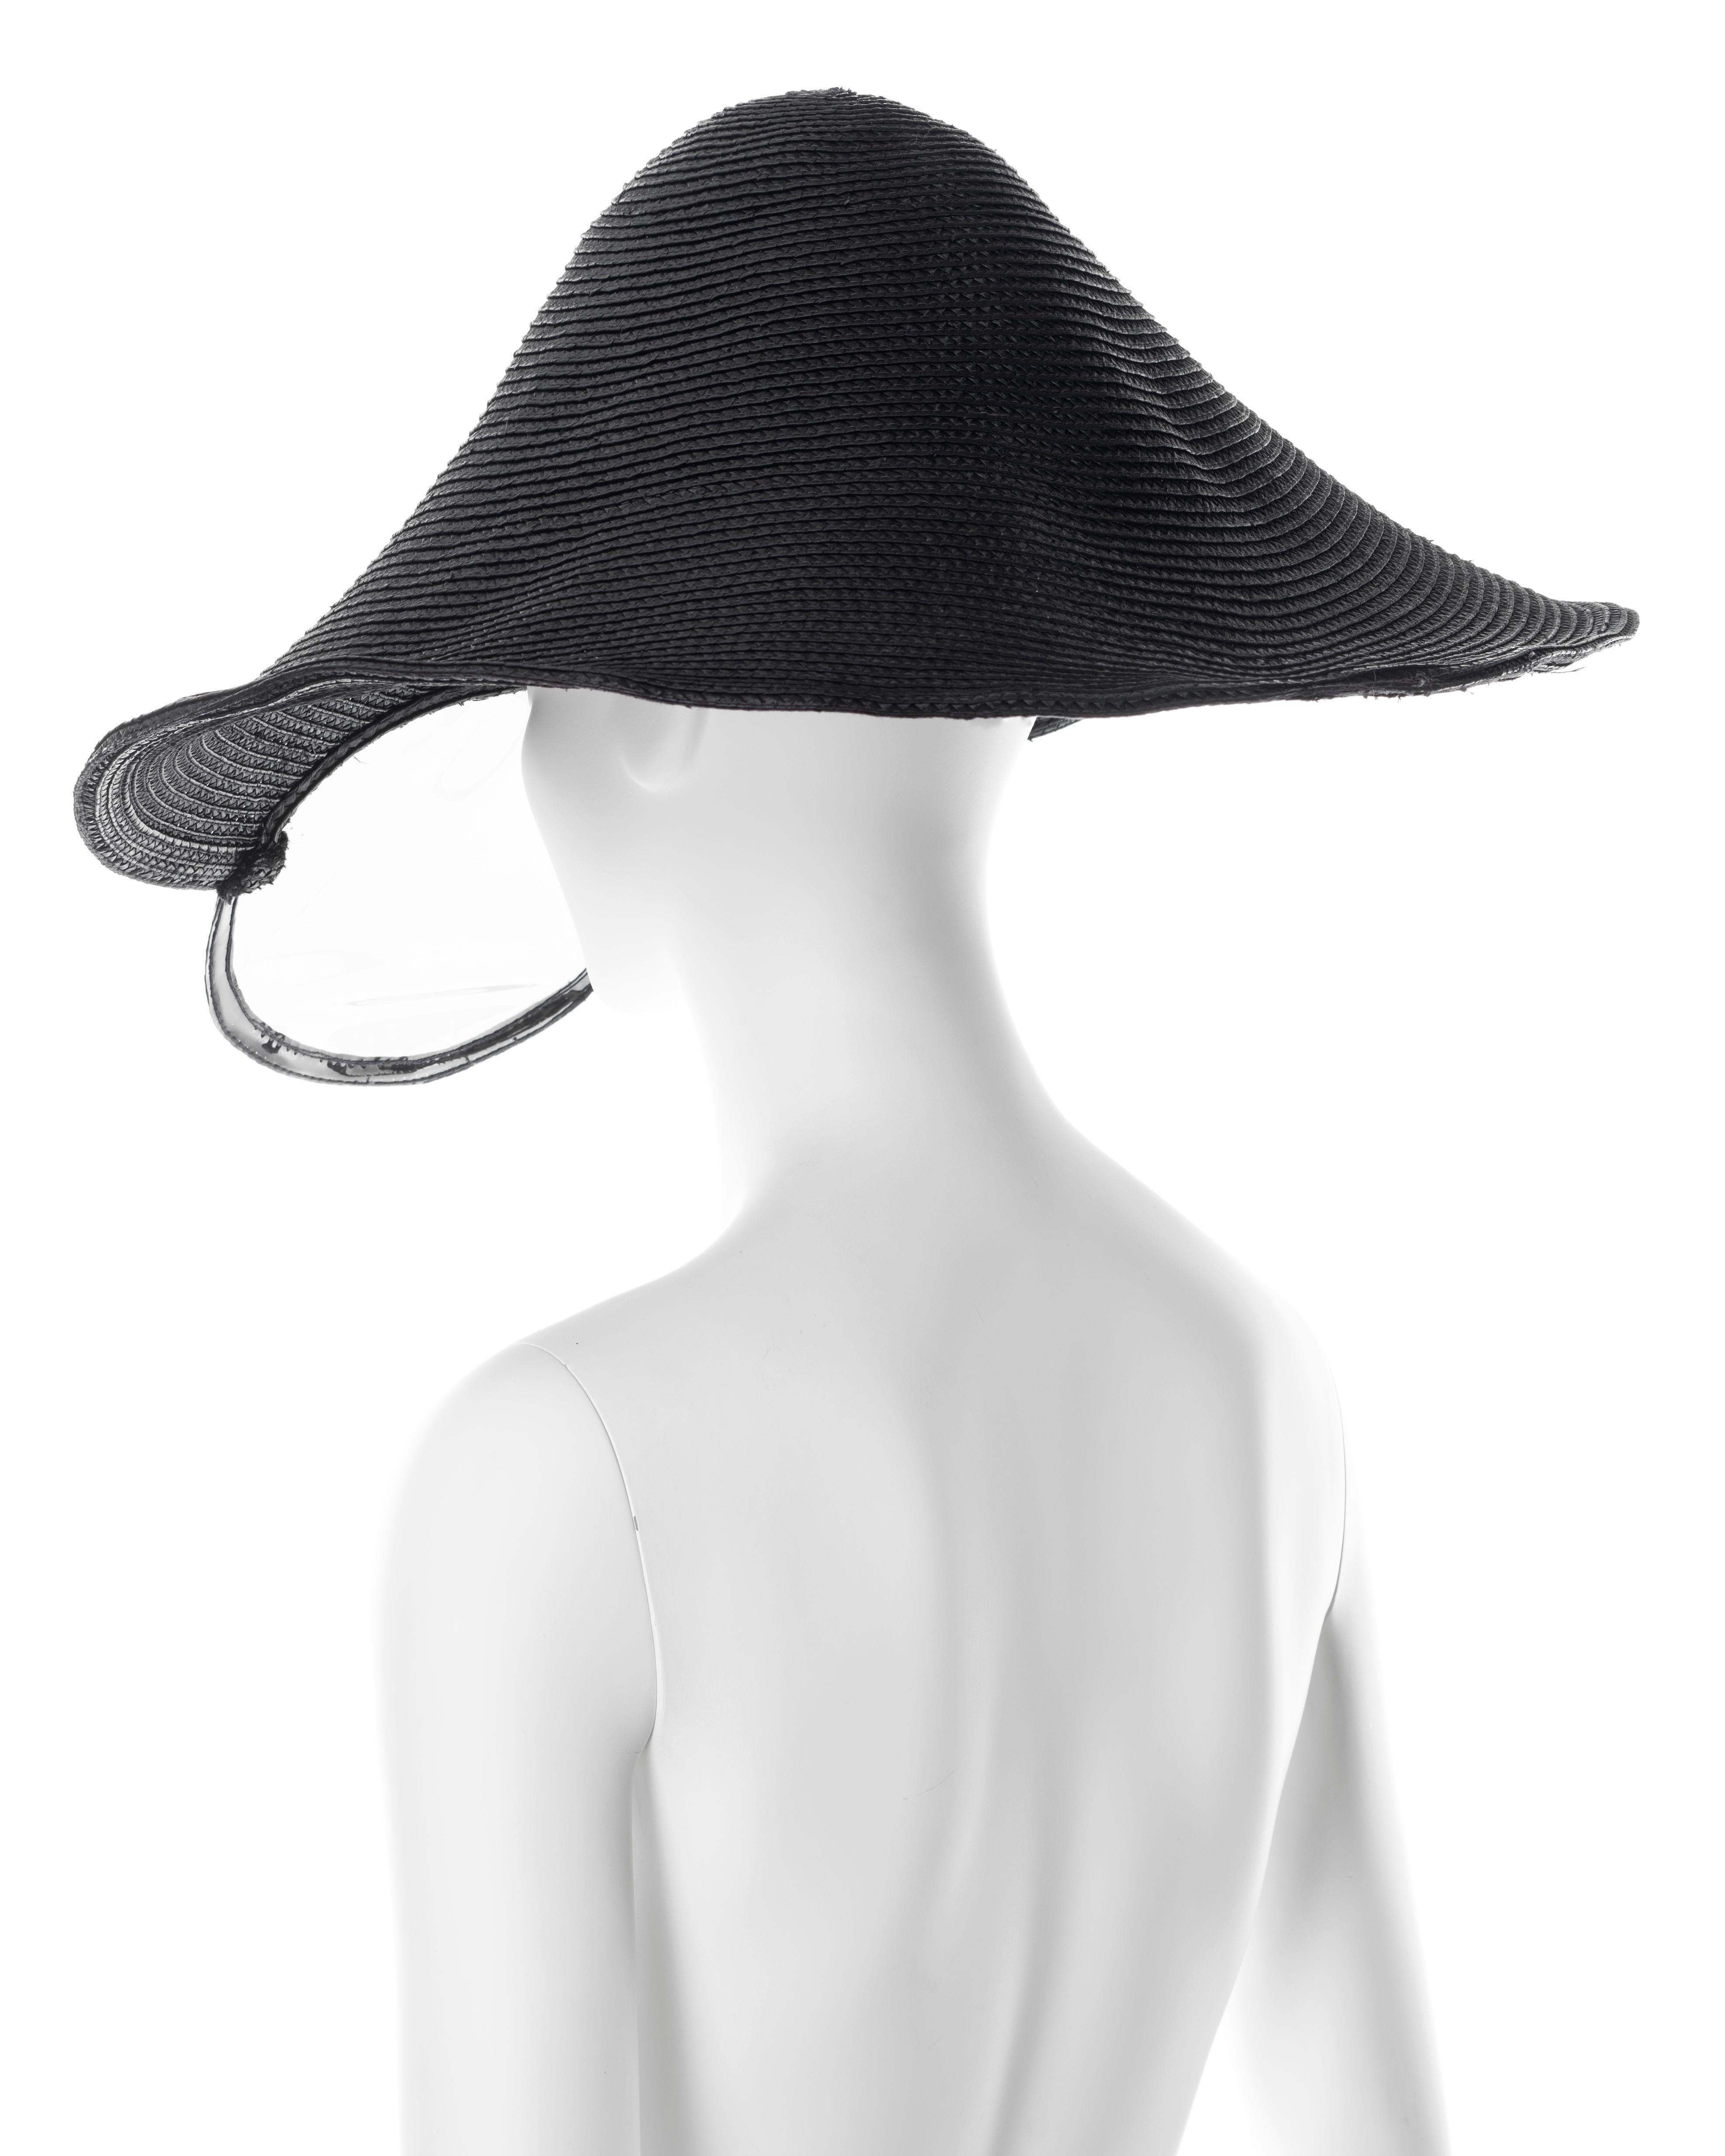 Paco Rabanne x Regis Haute Couture black straw hat with vinyl visor, ss 1994 3